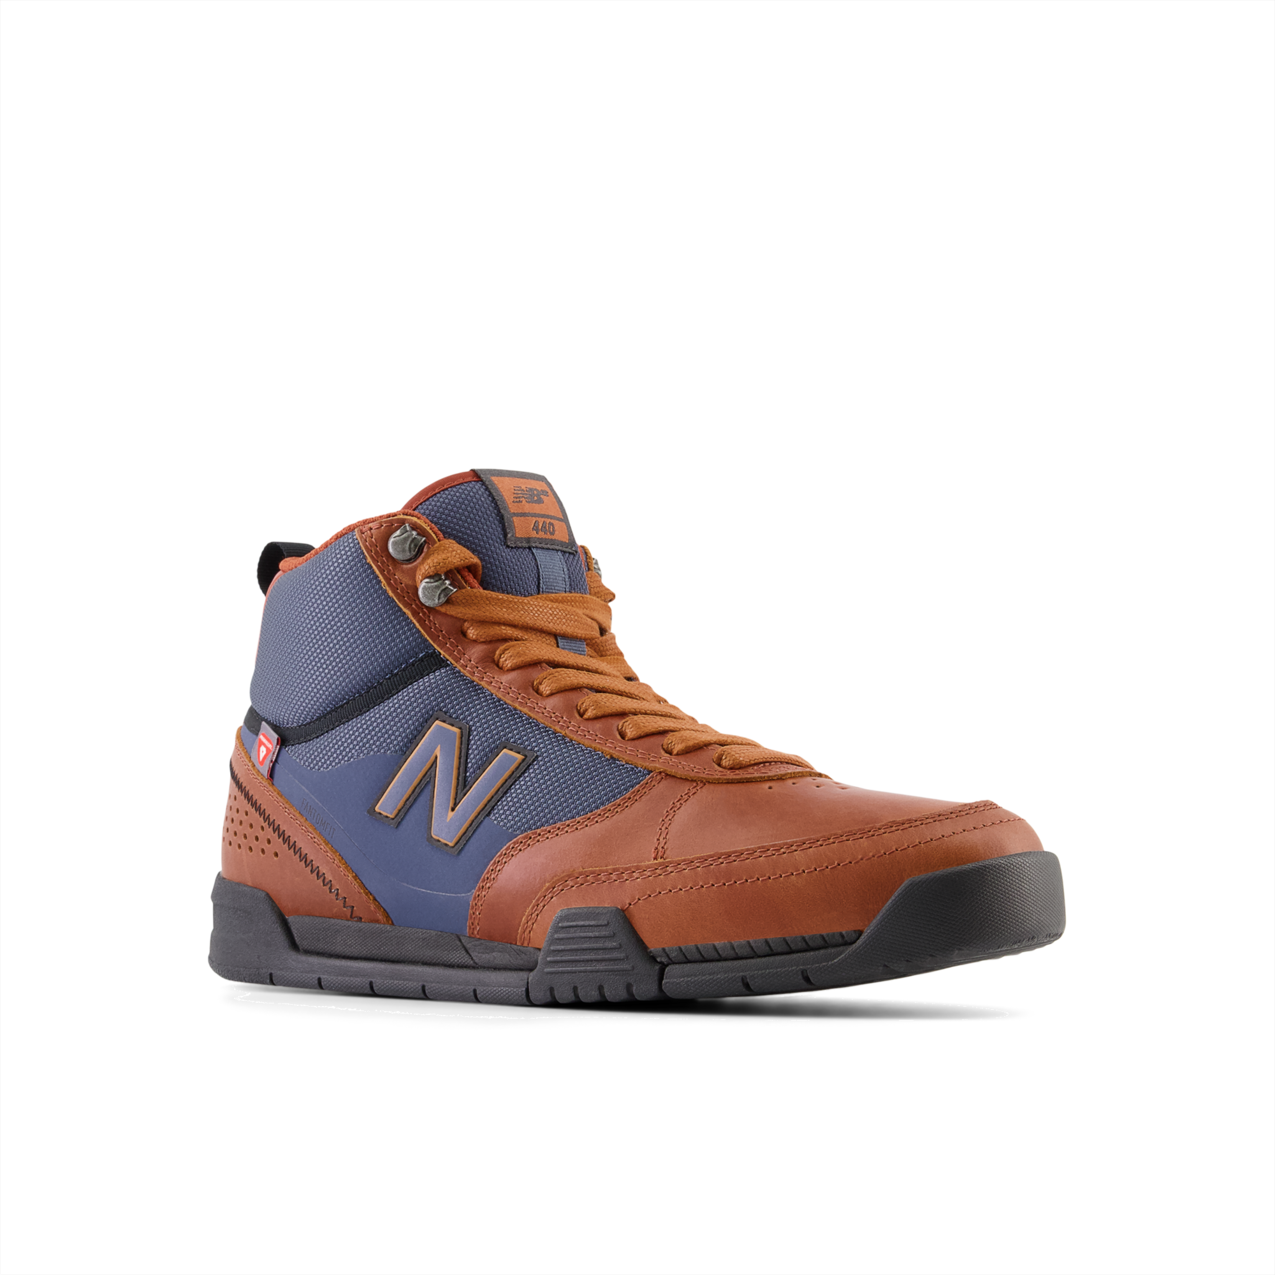 New Balance Numeric Men's 440 Trail Brown Tan Shoes